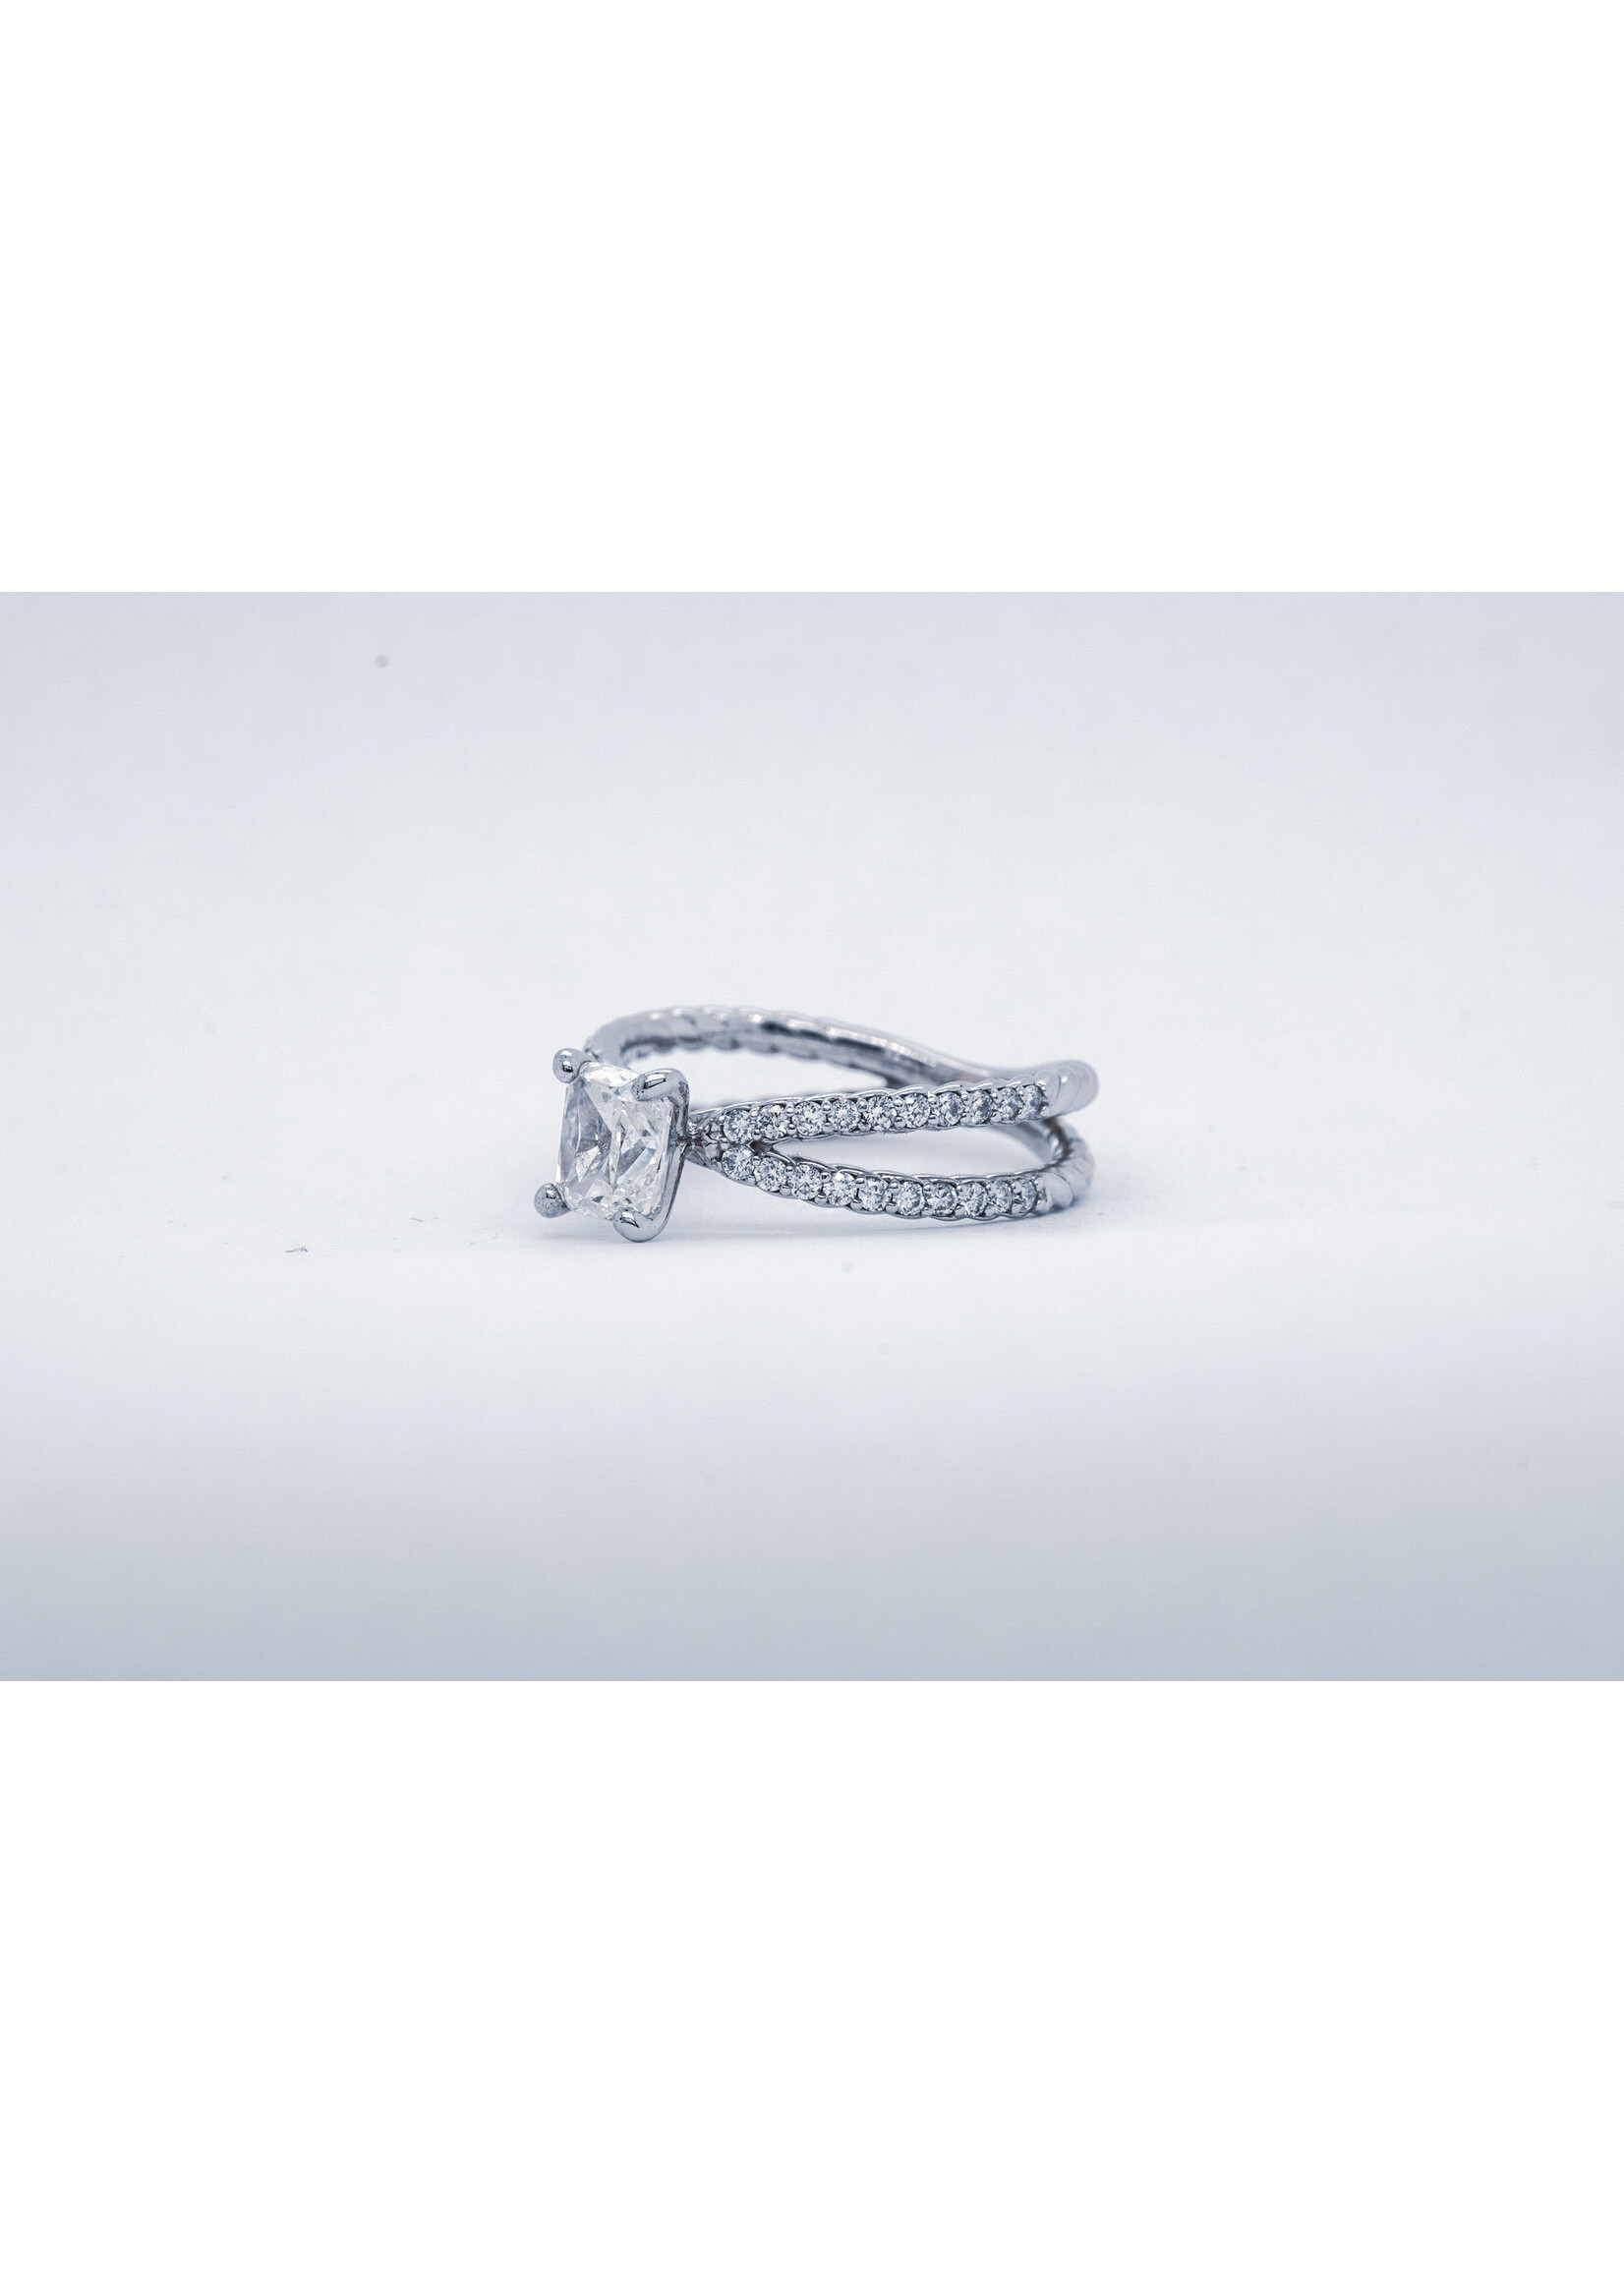 14KW 3.46g 1.37ctw (.97ctr) H/VVS2 GIA Cushion Diamond Engagement Ring (size 7)